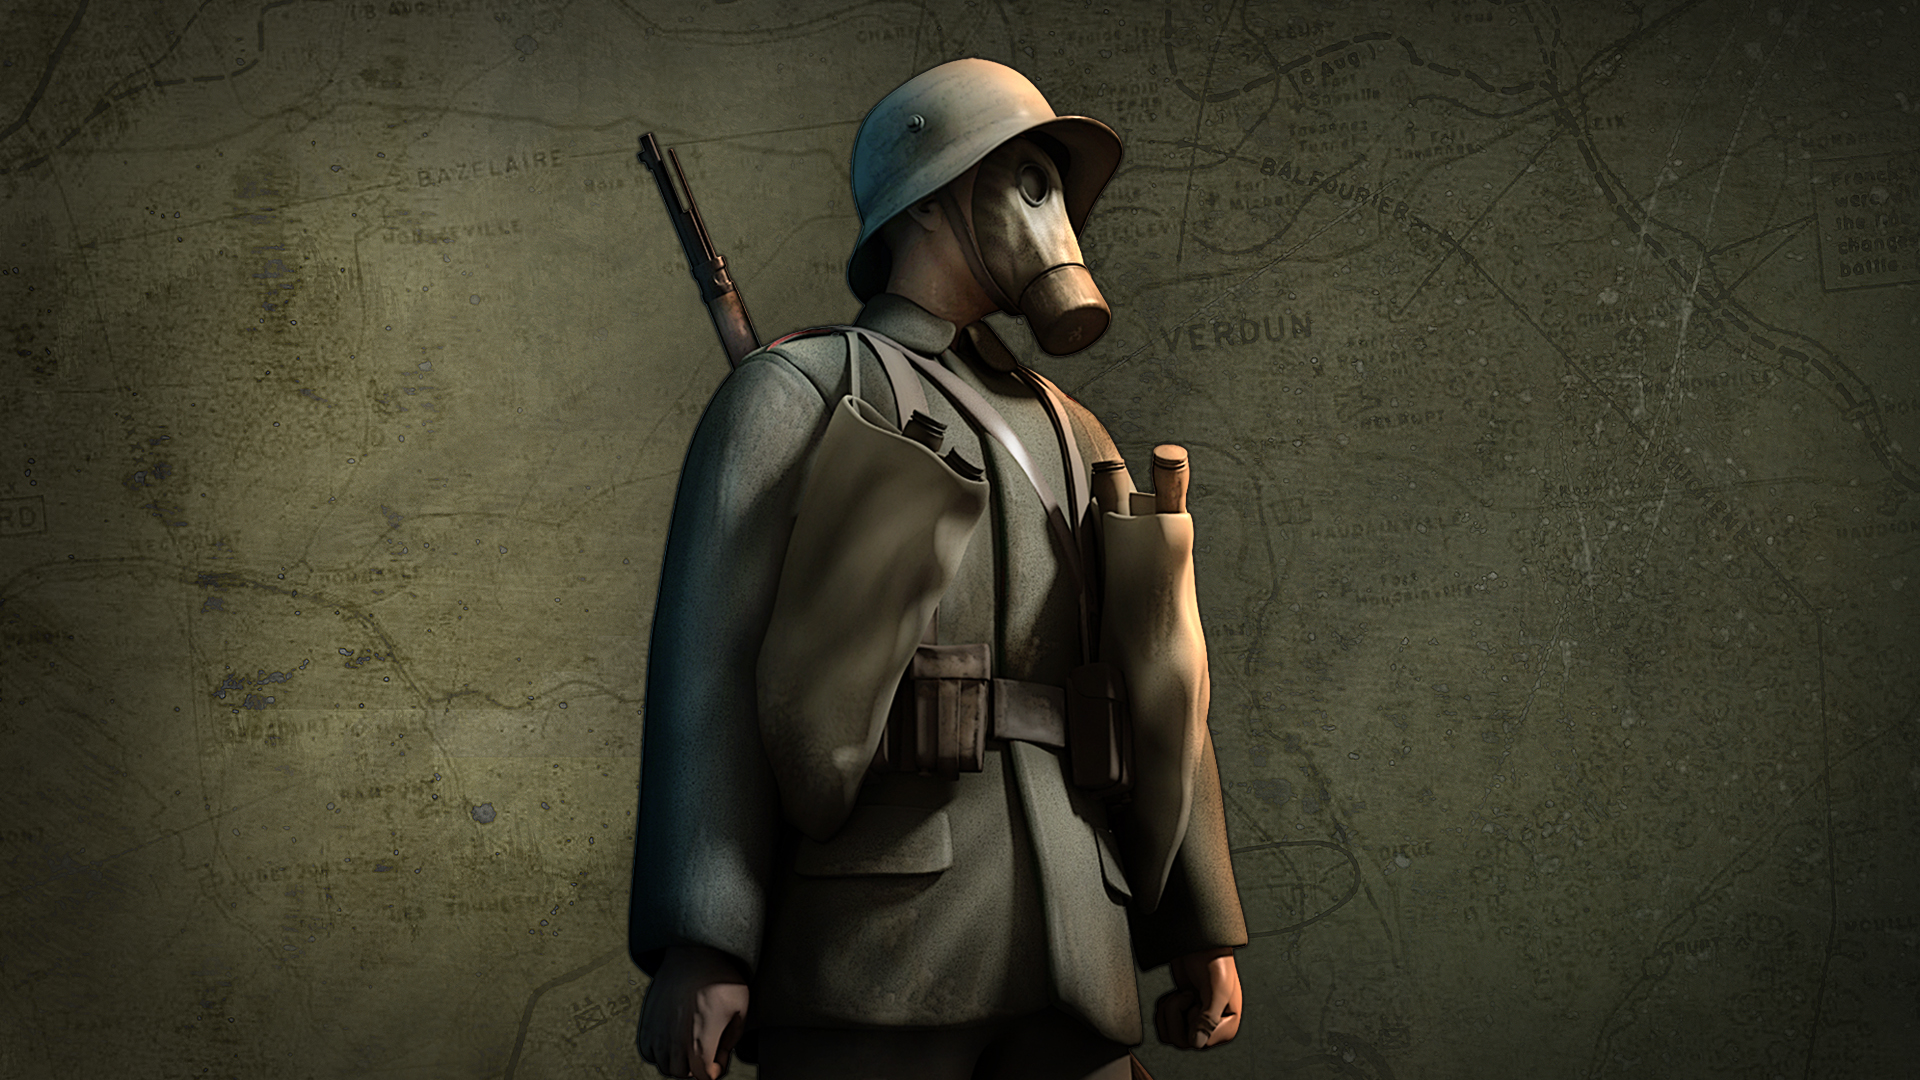 General 1920x1080 video game art war Verdun minimalism simple background hat soldier gun uniform looking away